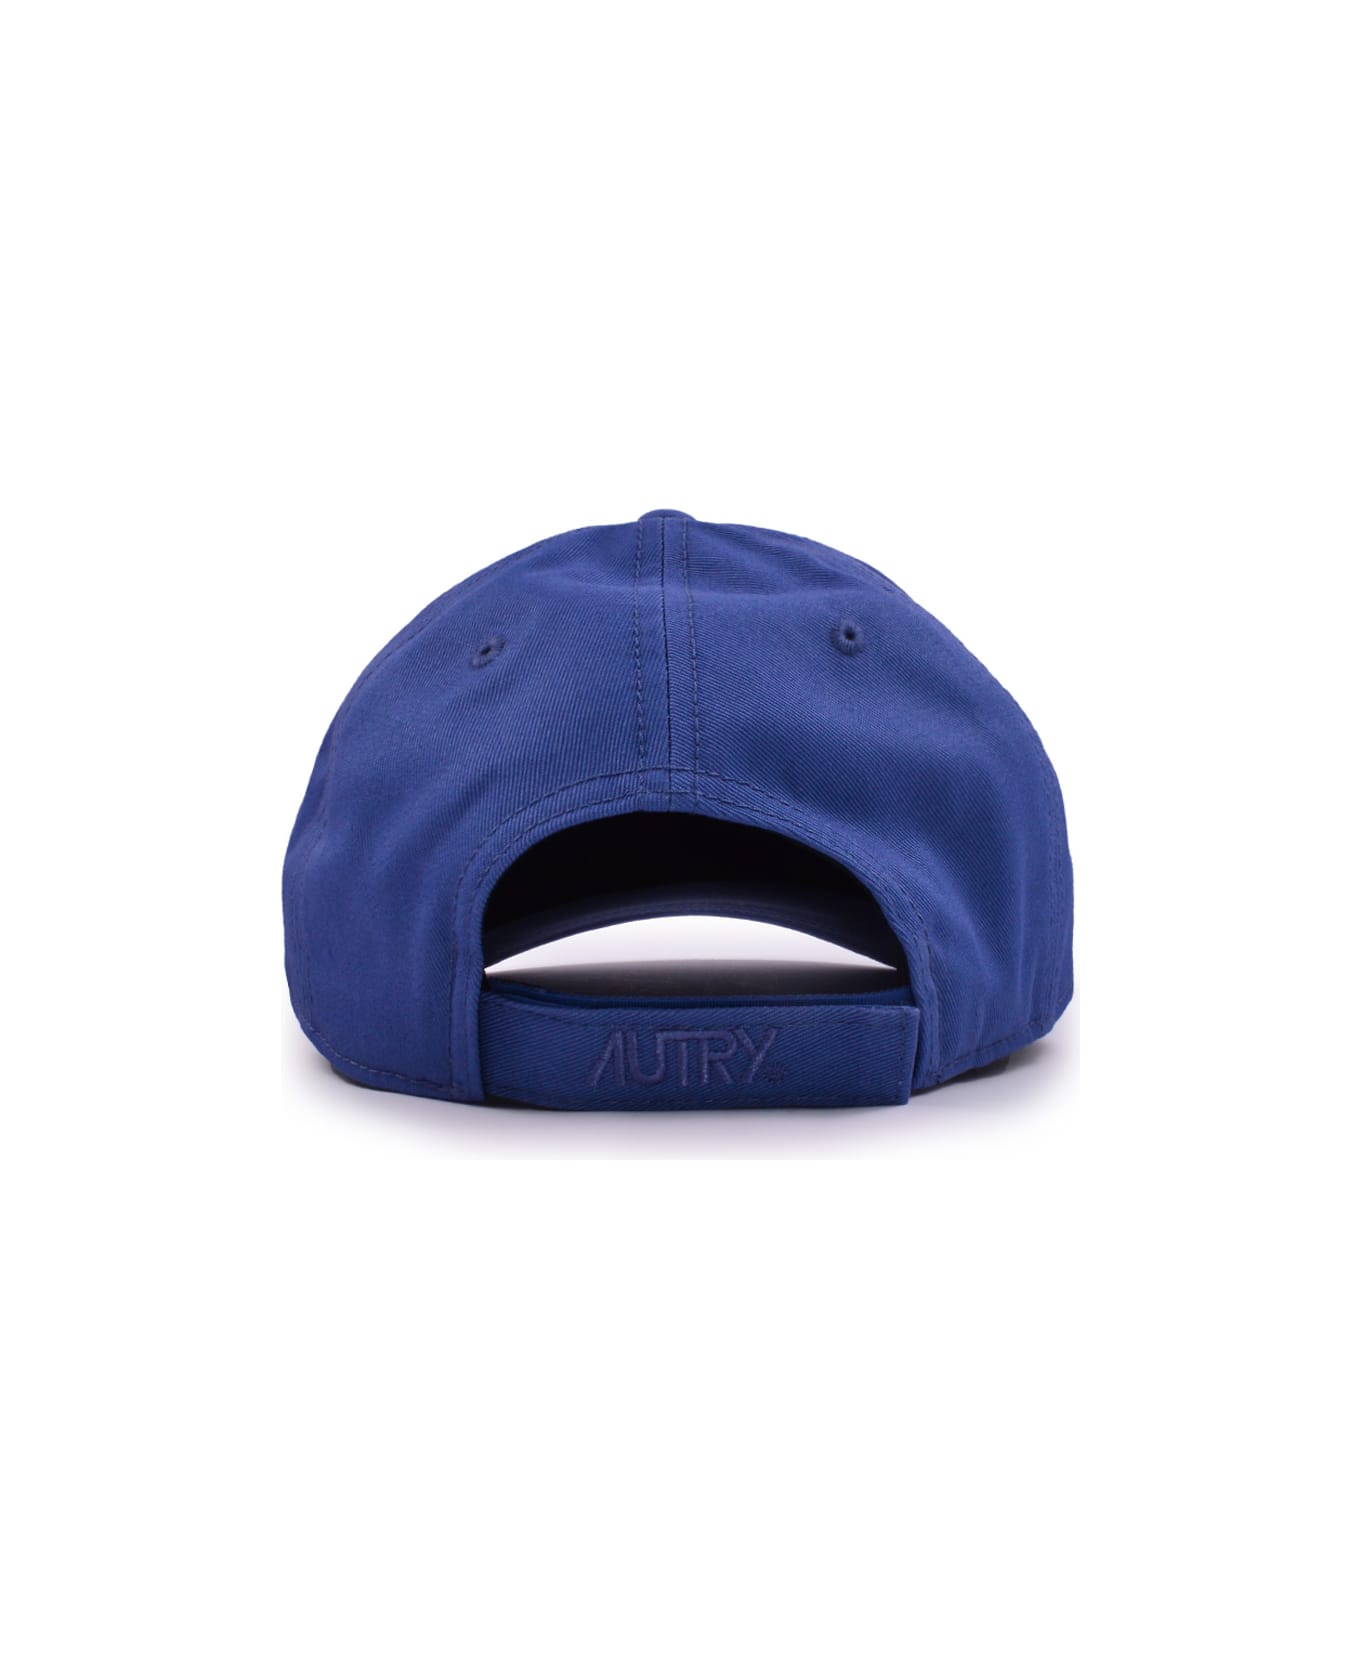 Autry Hats - Light blue 帽子